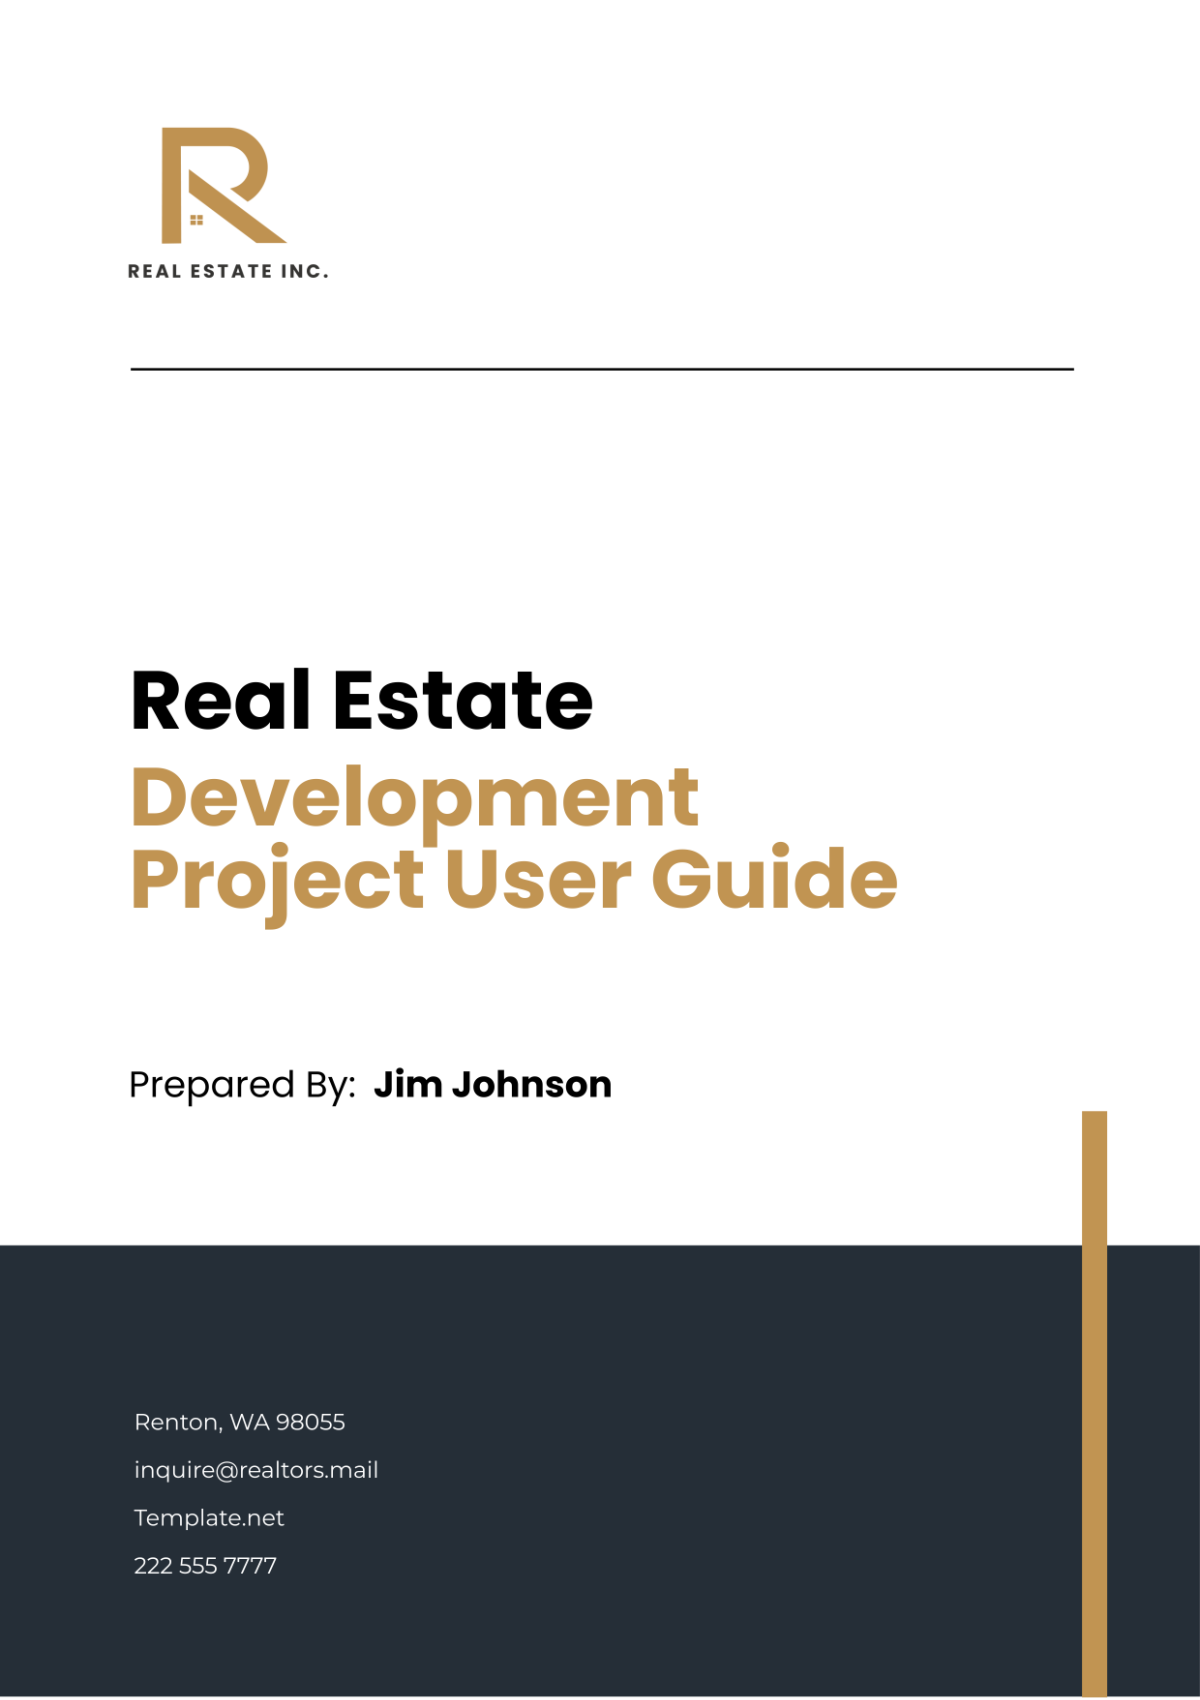 Real Estate Development Project User Guide Template